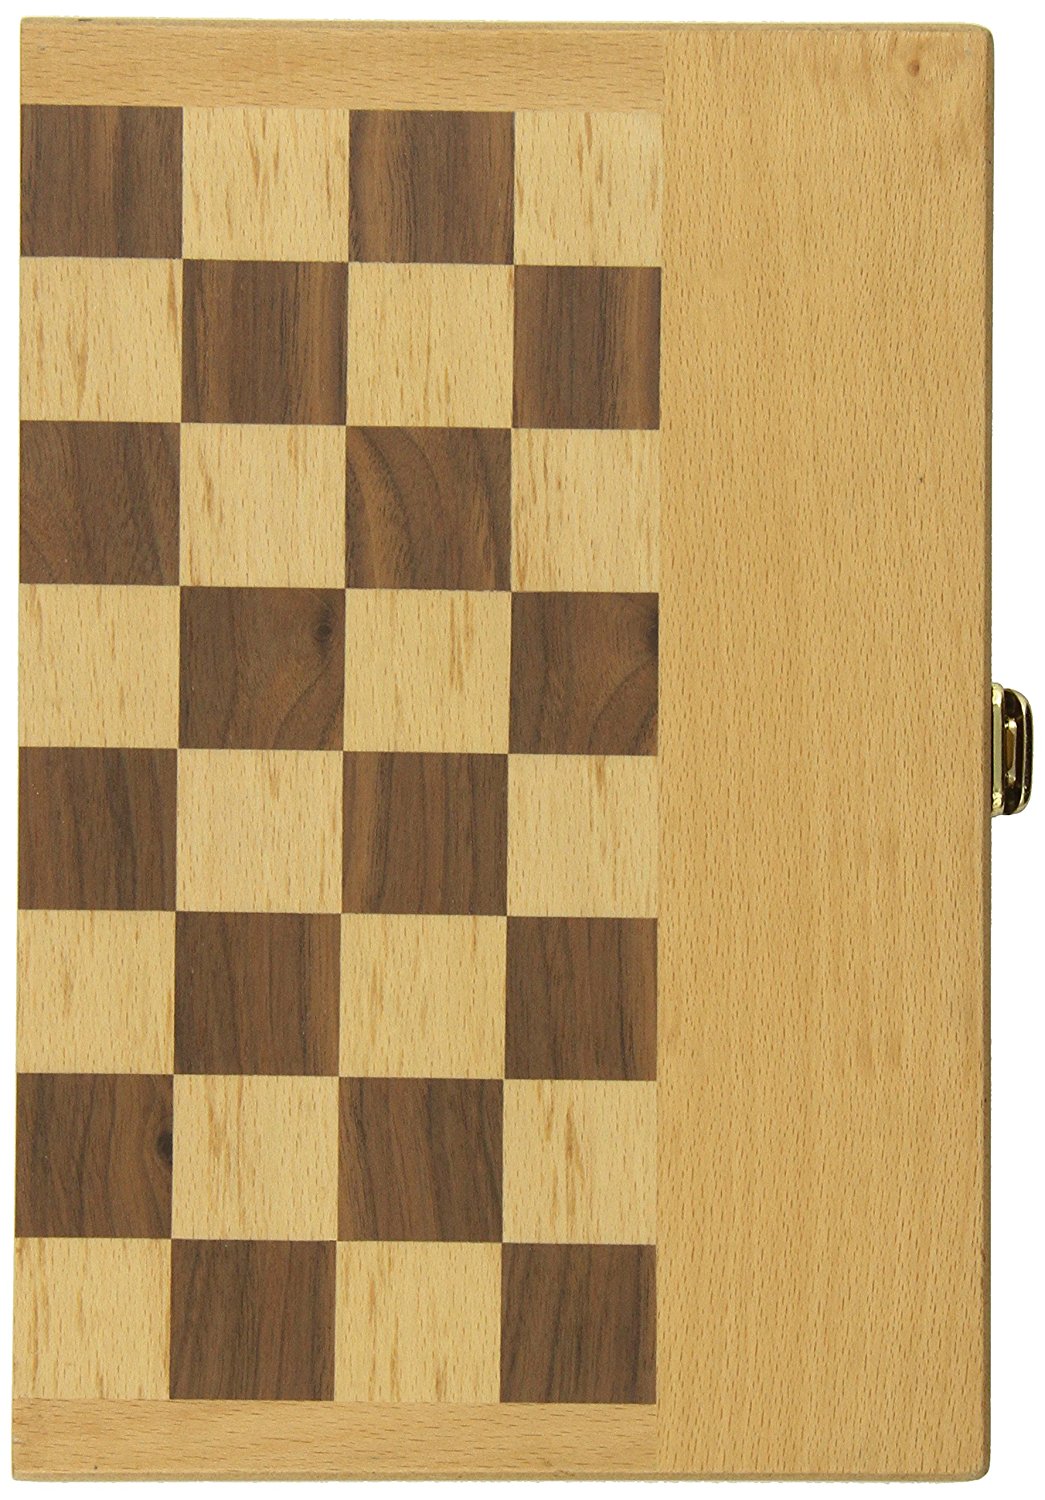 Recreational Chess & Shut The Box Strategy Game Set, White/Brown